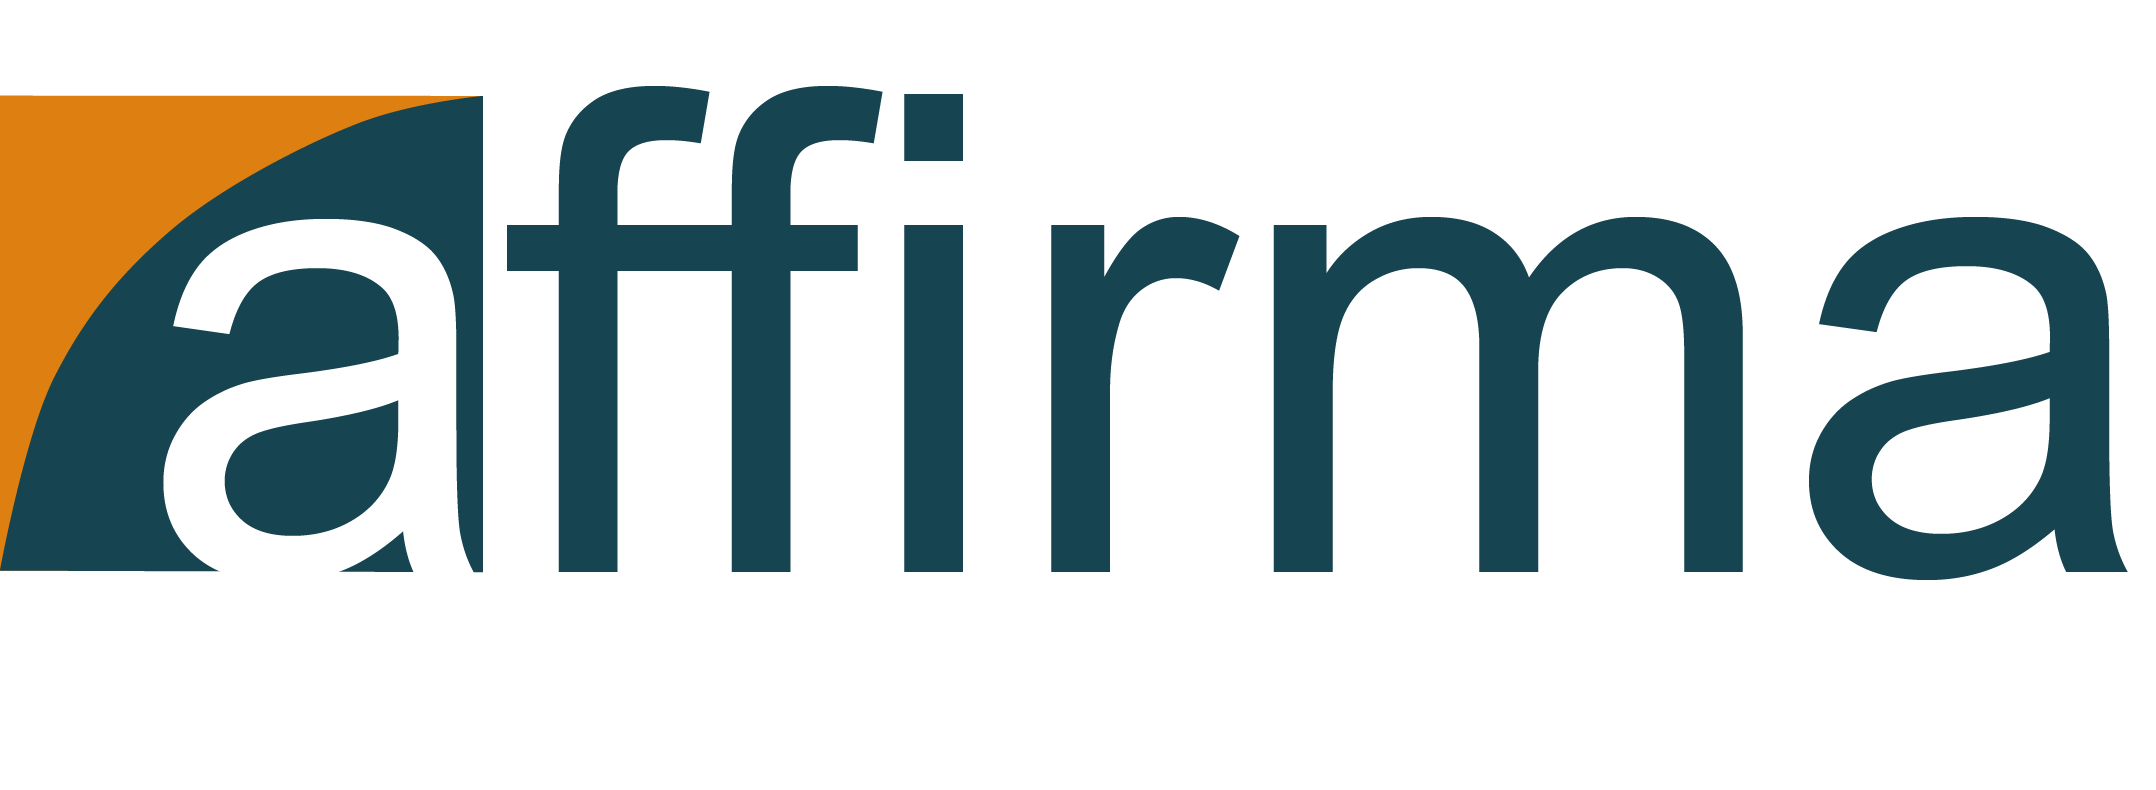 Affirma_Logo